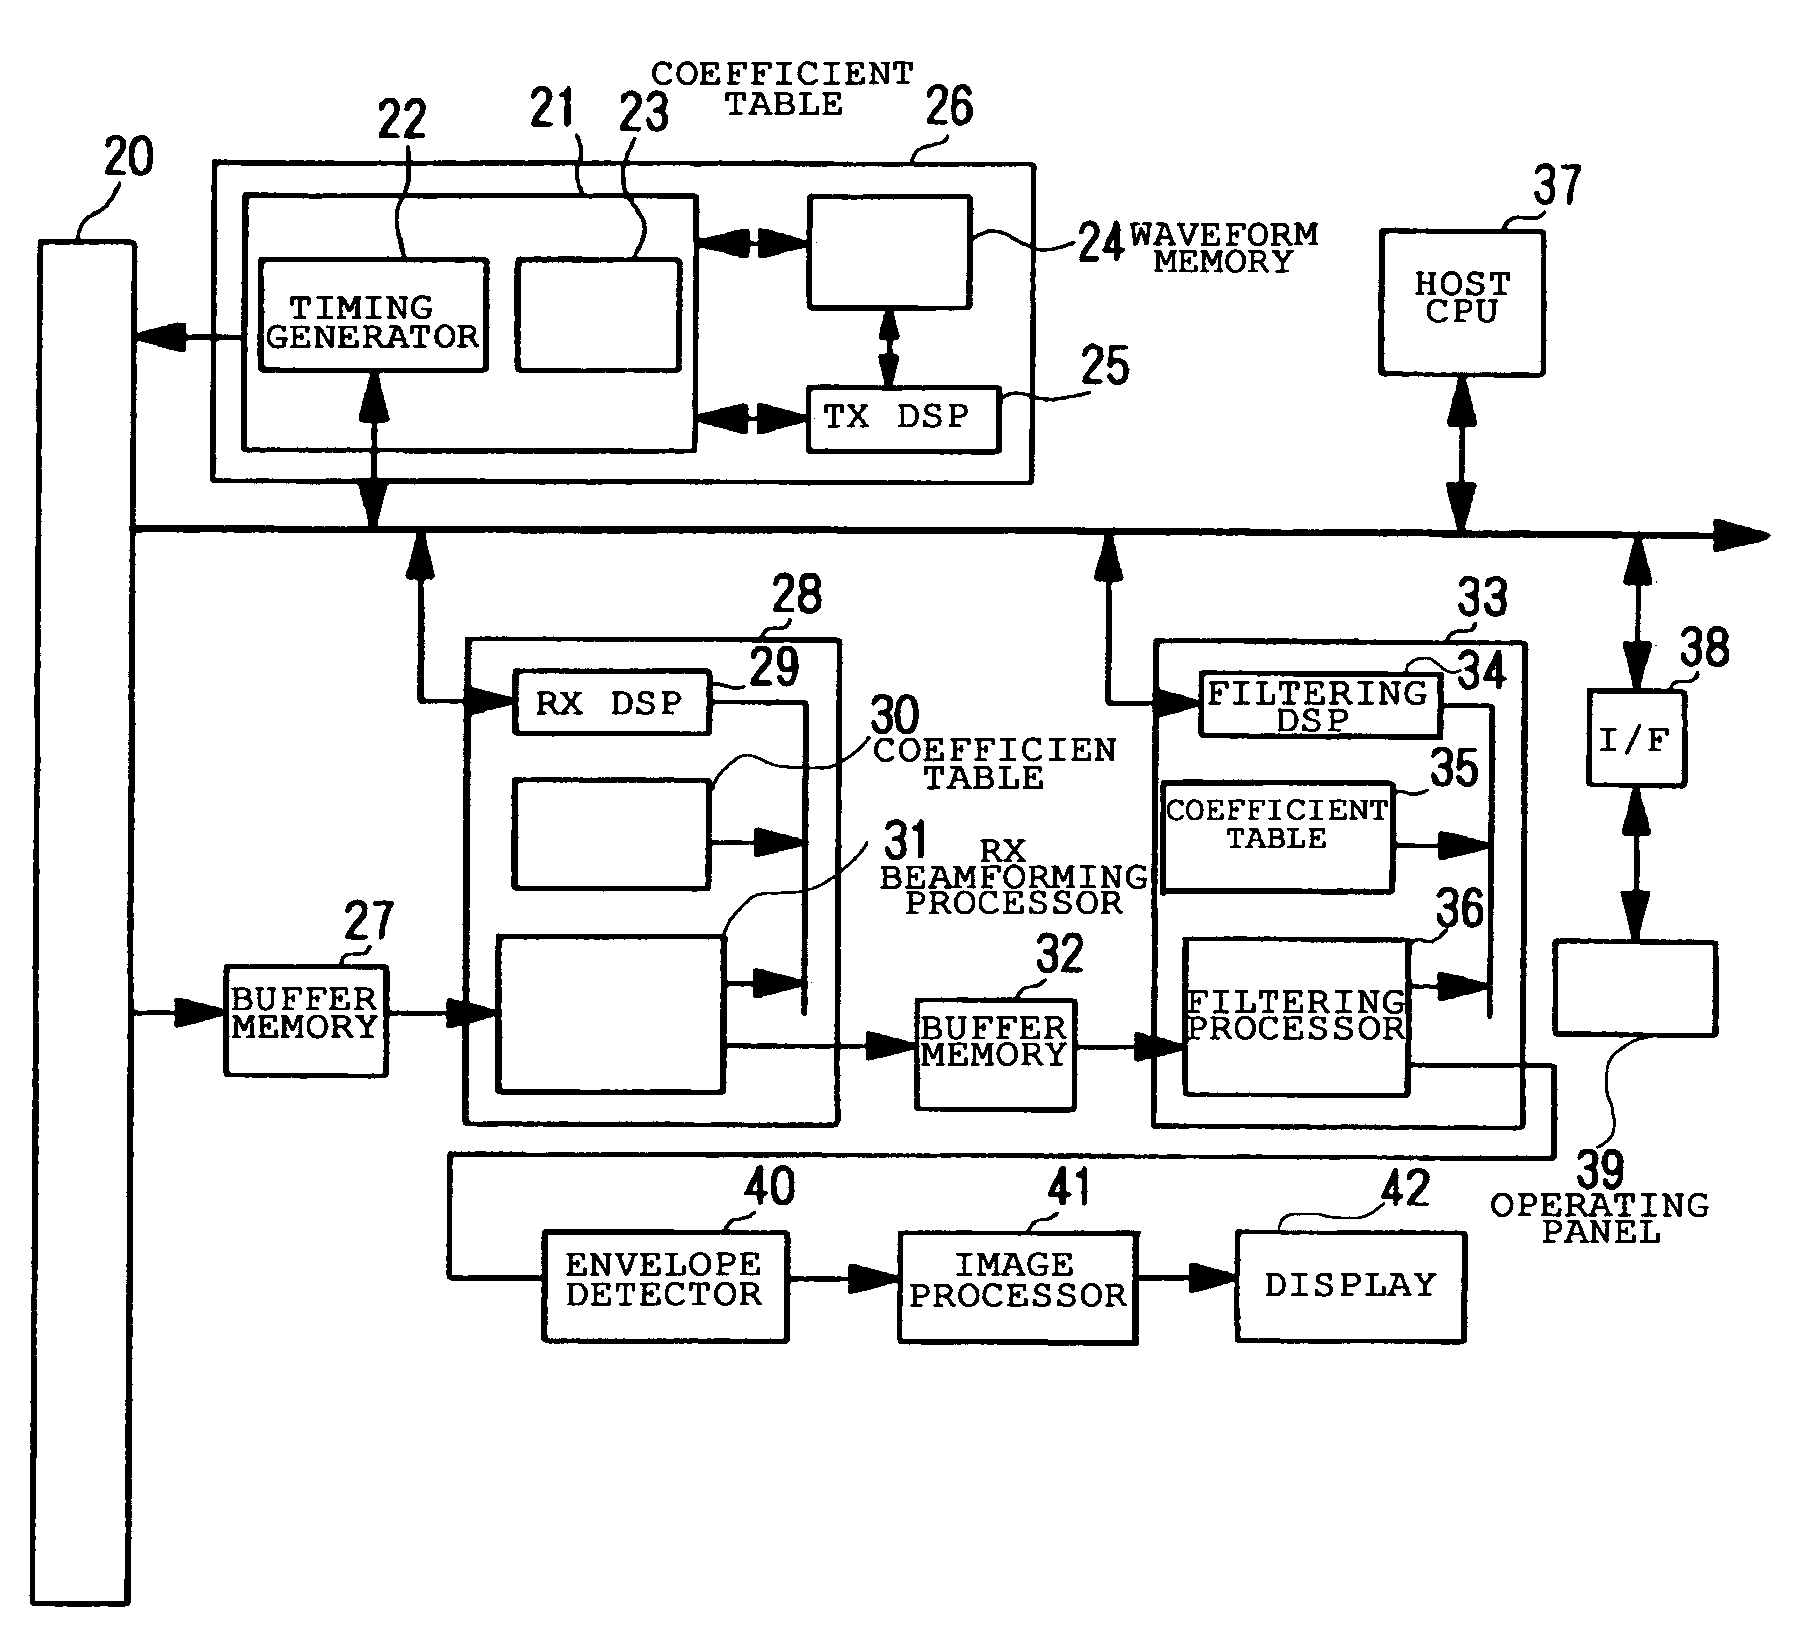 Ultrasonic transmitter, ultrasonic transceiver and sonar apparatus